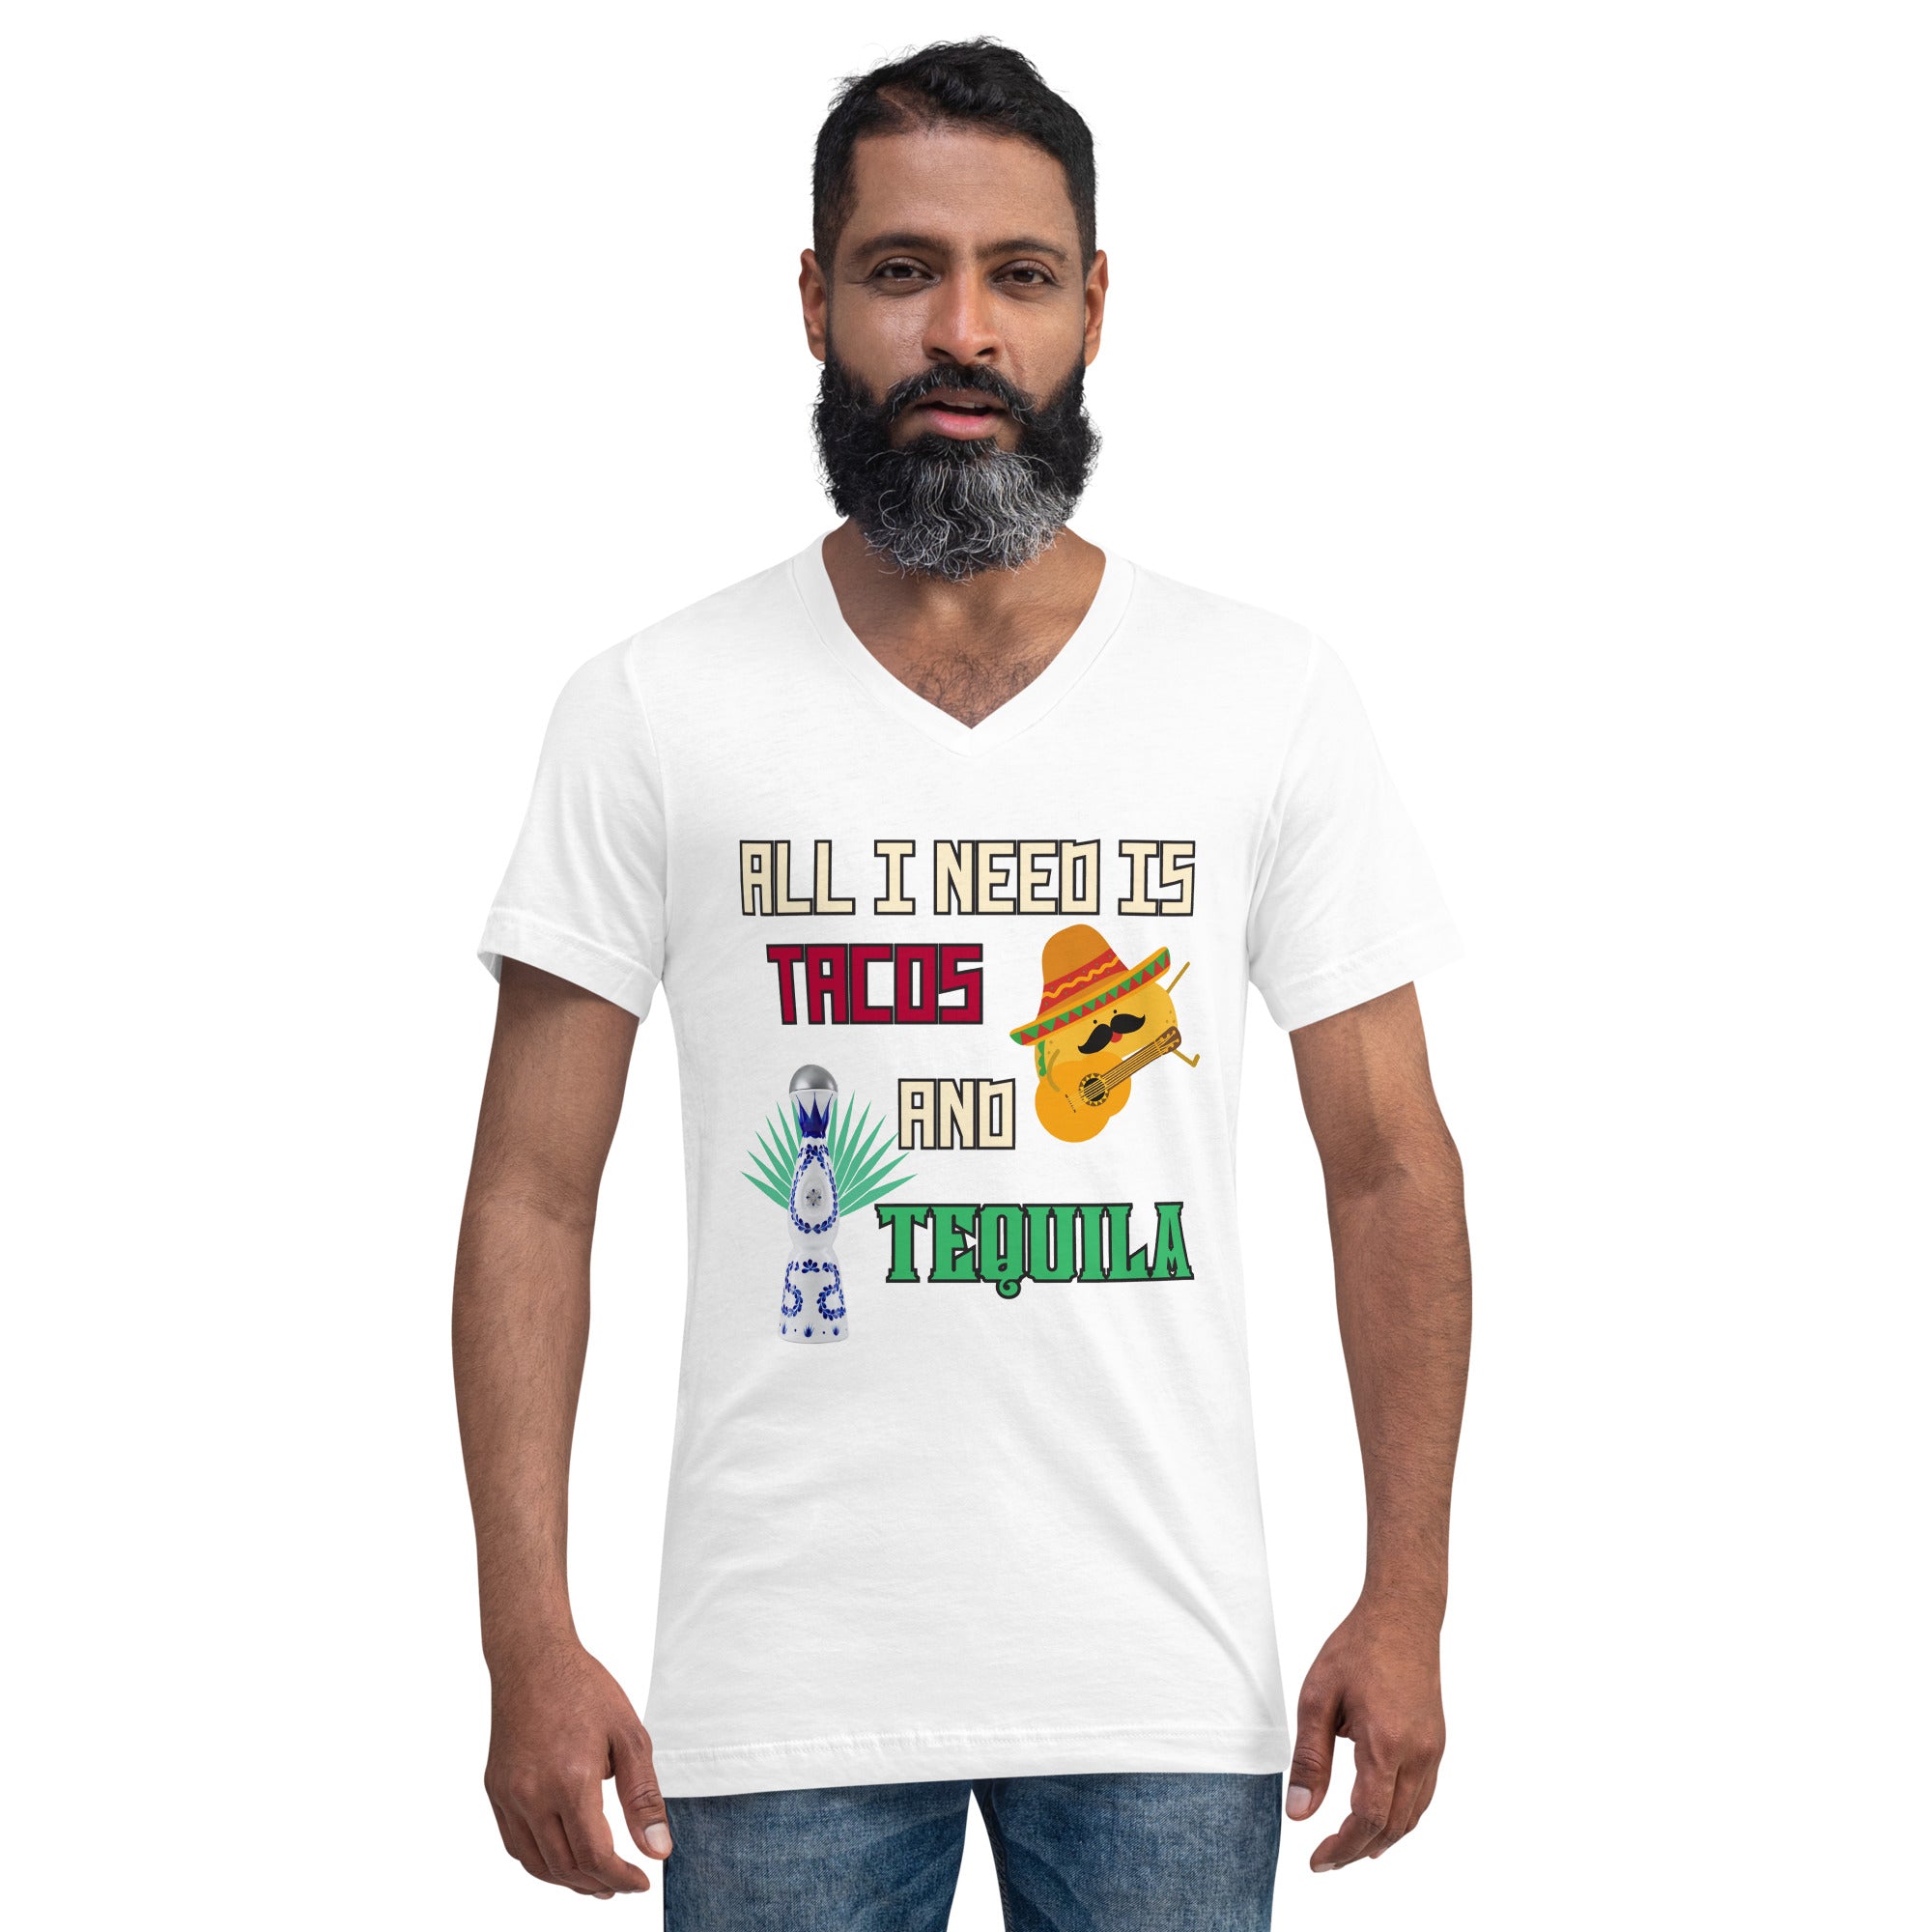 Tacos and Tequila Unisex Short Sleeve V-Neck T-Shirt